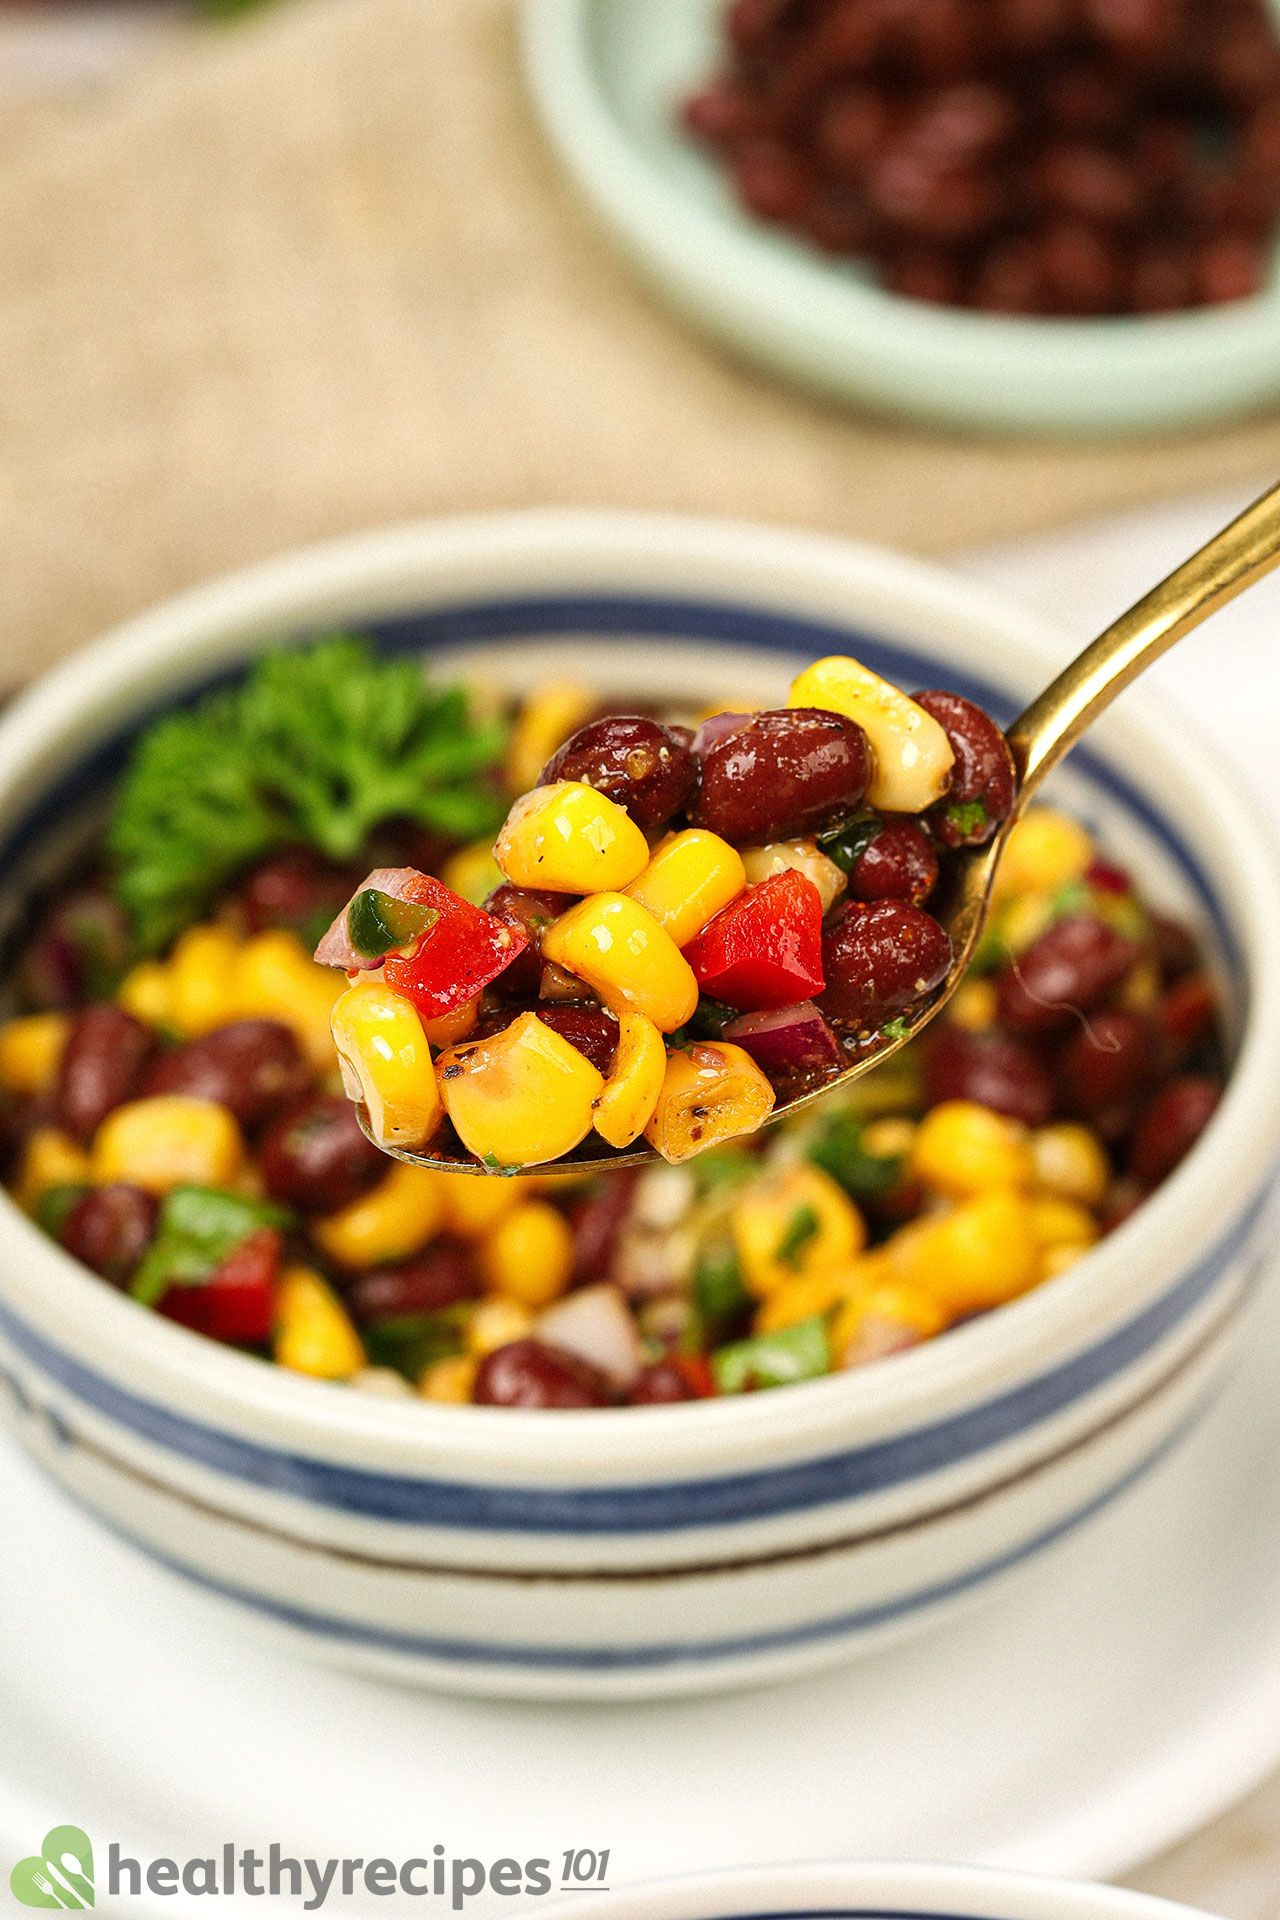 Is Corn Black Bean Salad Healthy